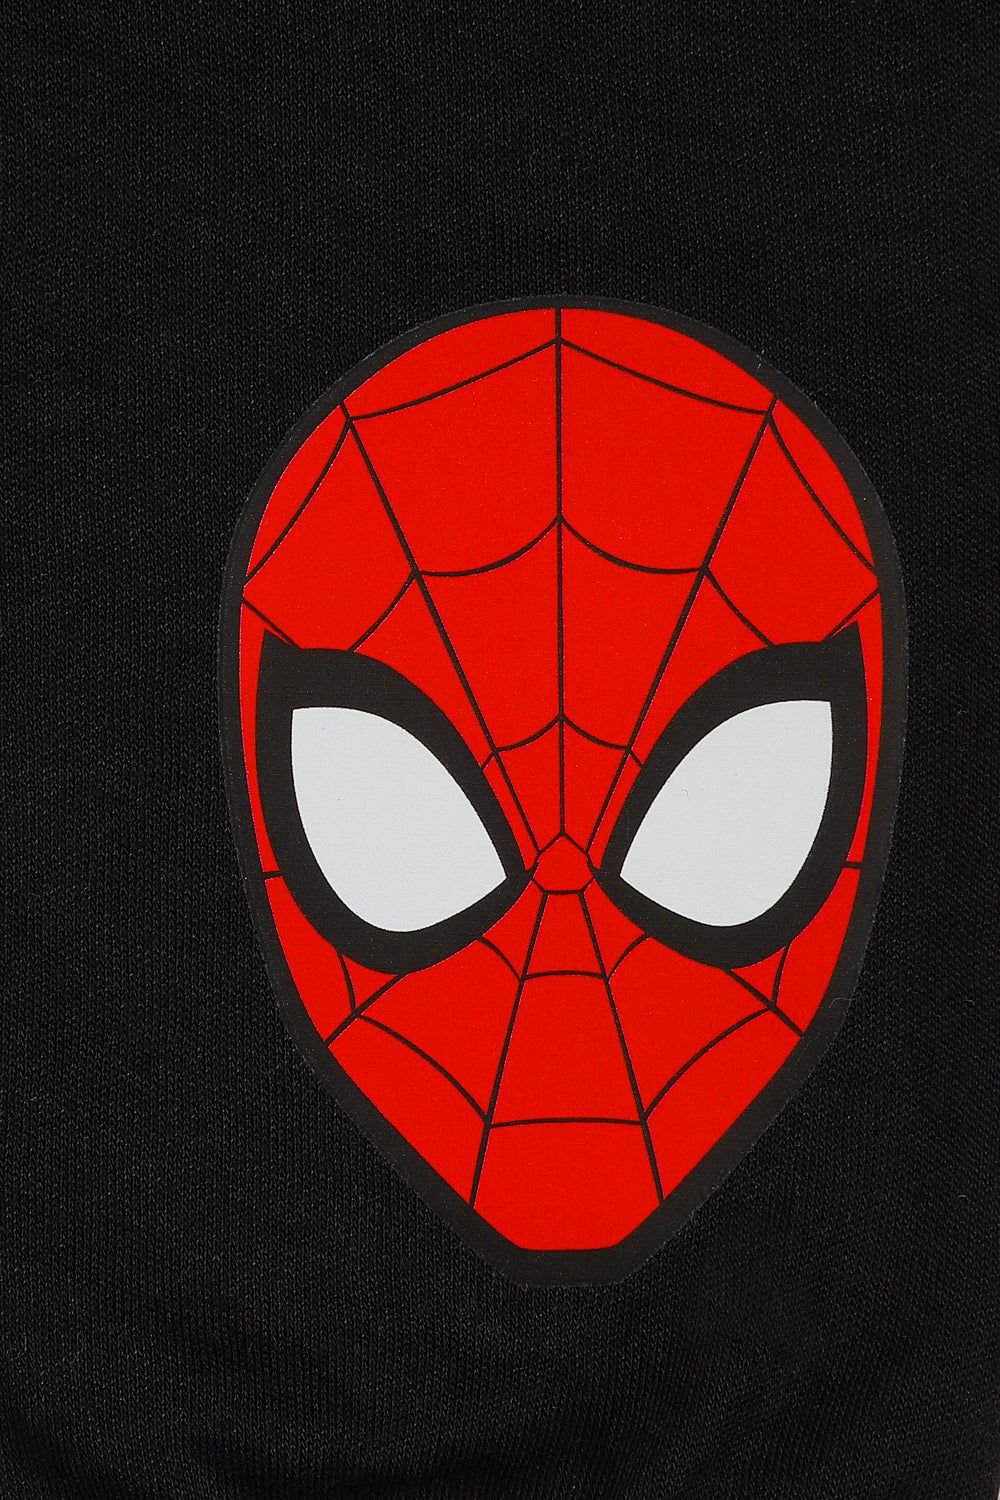 Boys Official Marvel Spiderman Long Pyjamas - Pyjamas.com